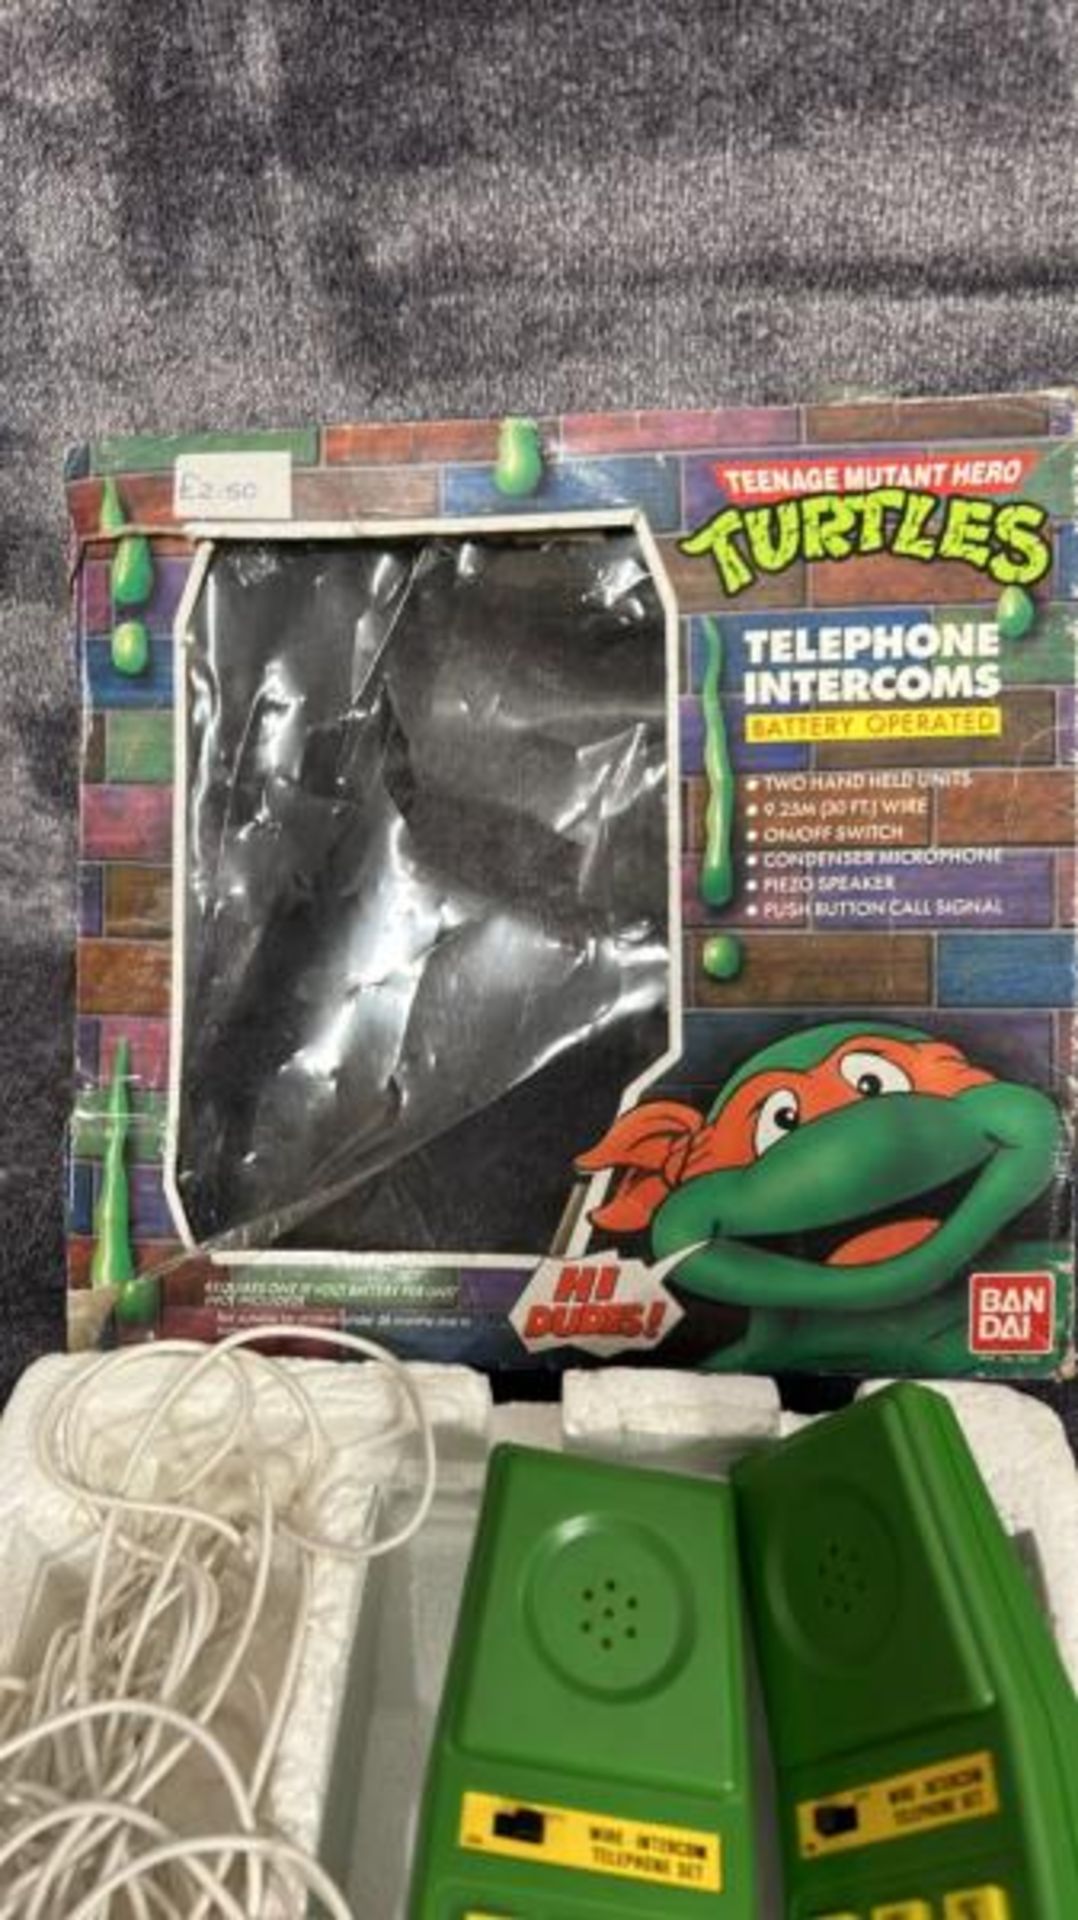 Teenage Mutant Hero Turtles - boxed Ban Dai Intercom telephone toy, Turtles VI game for Super - Image 3 of 6